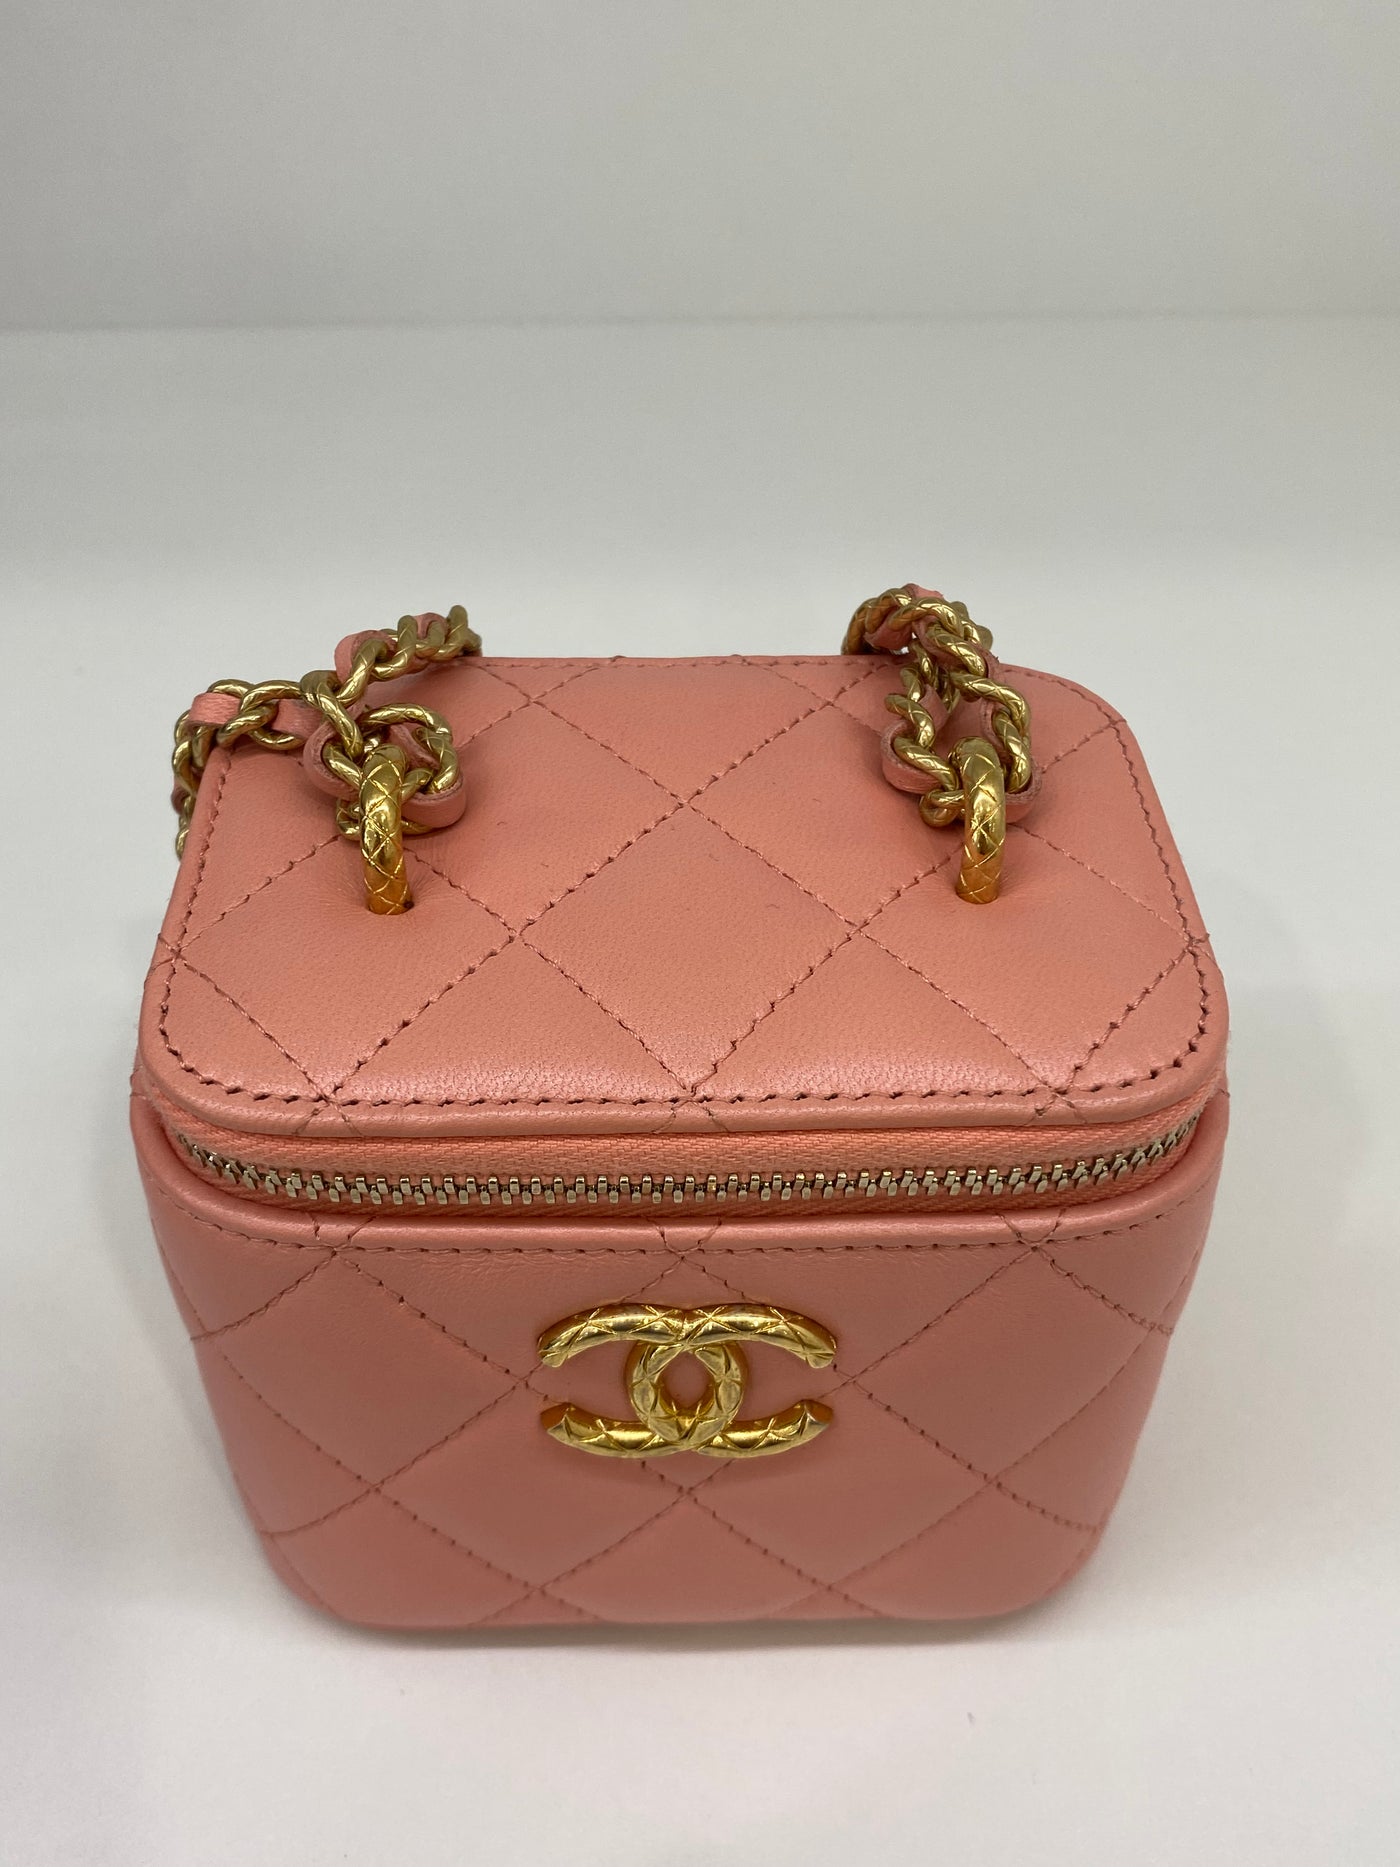 Chanel Mini Vanity Case Peach GHW